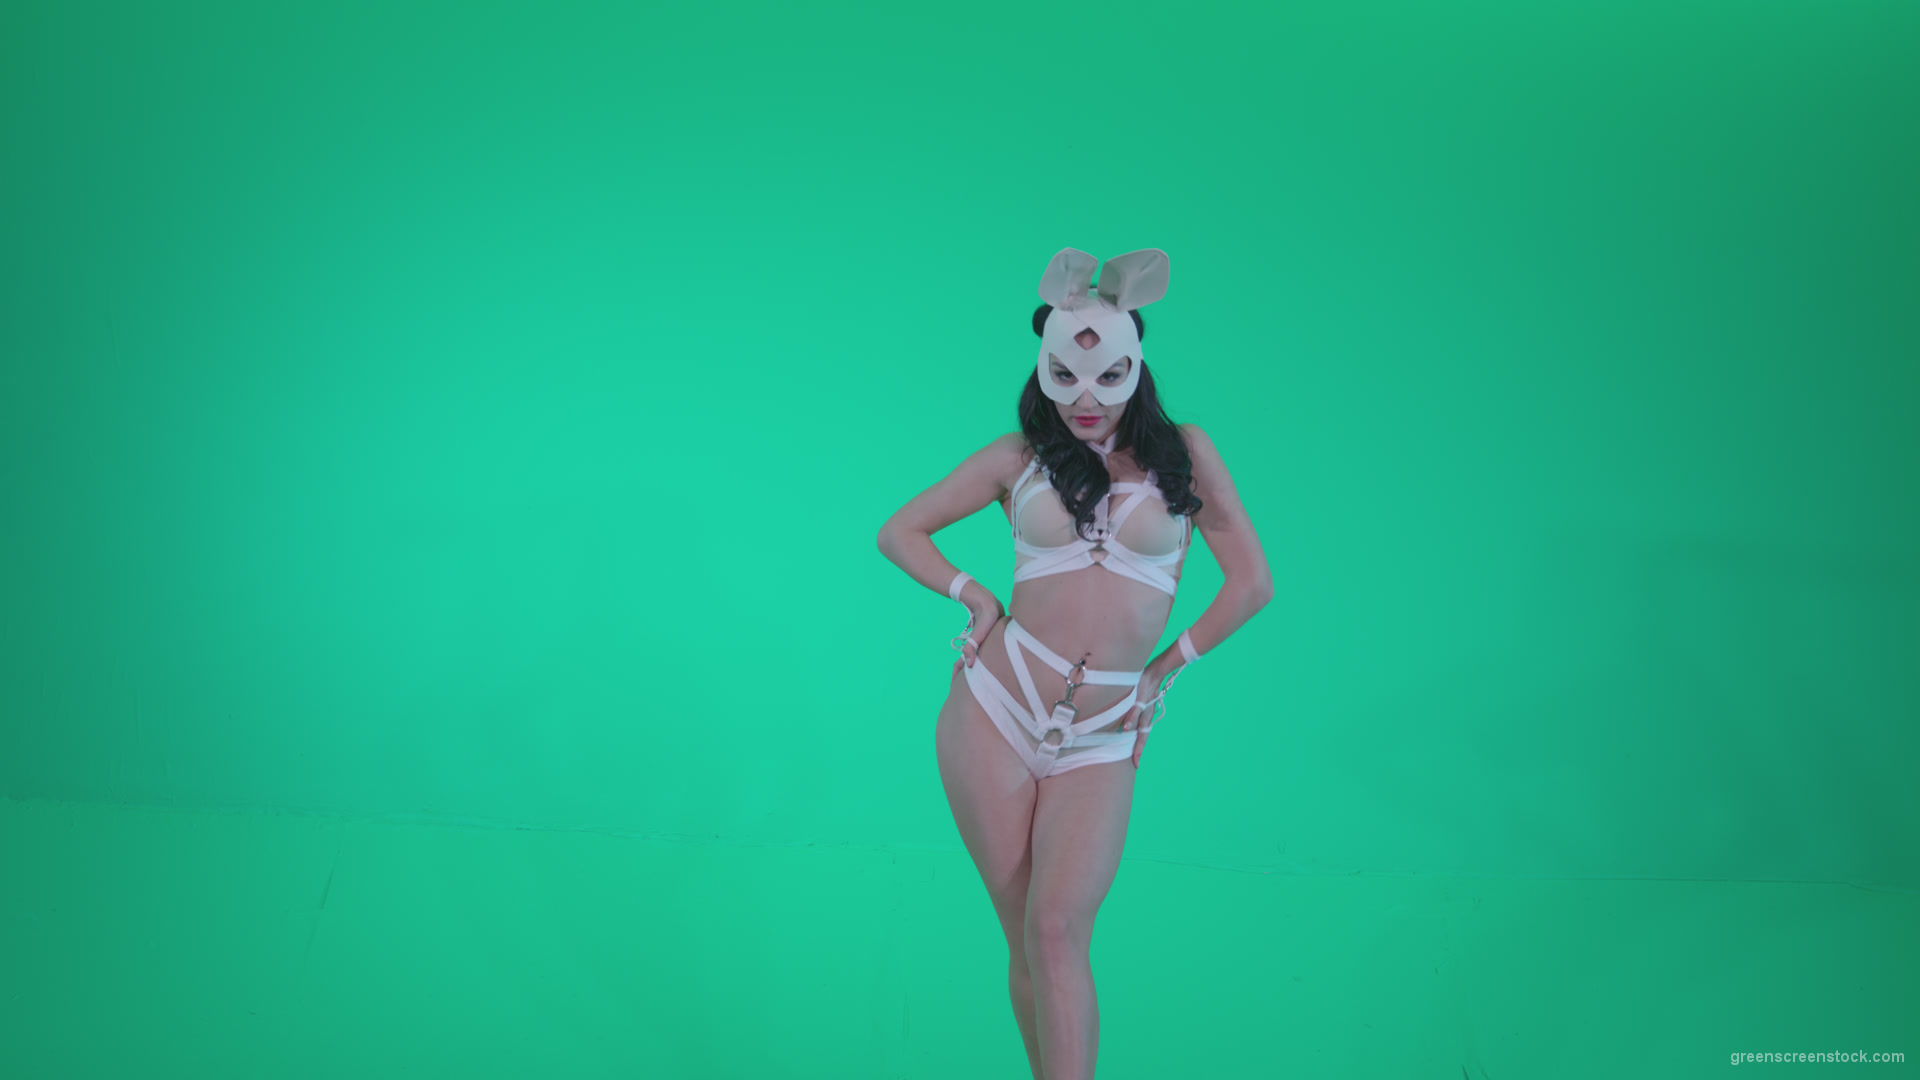 Go-go-Dancer-White-Rabbit-m9-Green-Screen-Video-Footage_004 Green Screen Stock